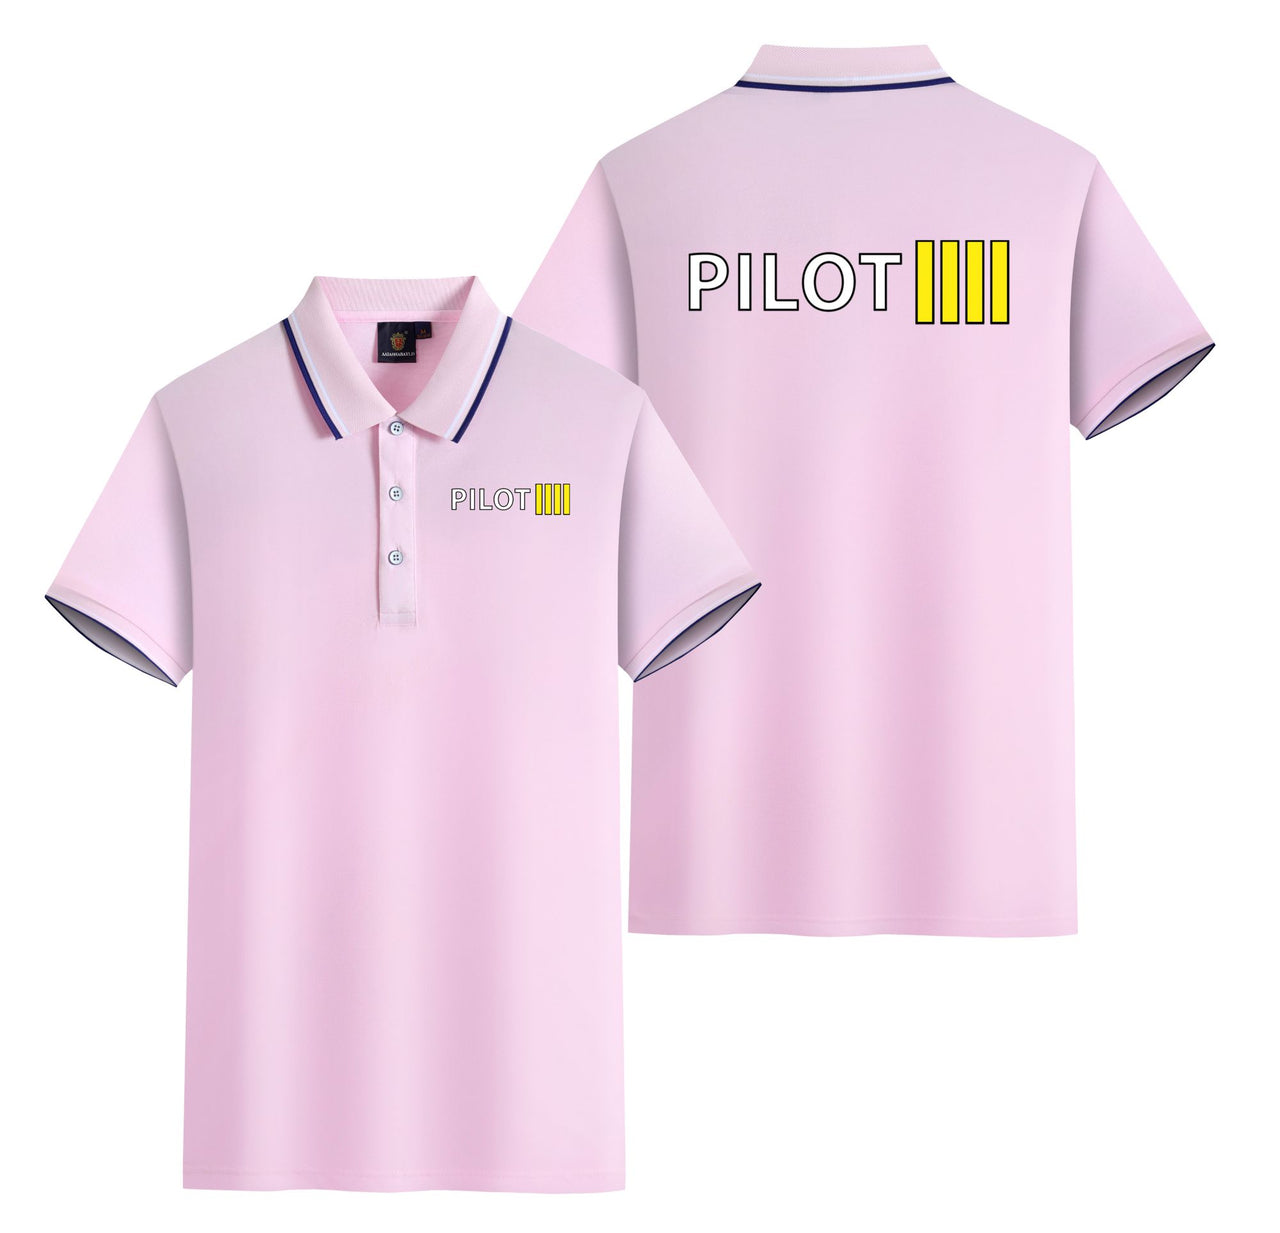 Pilot & Stripes (4 Lines) Designed Stylish Polo T-Shirts (Double-Side)